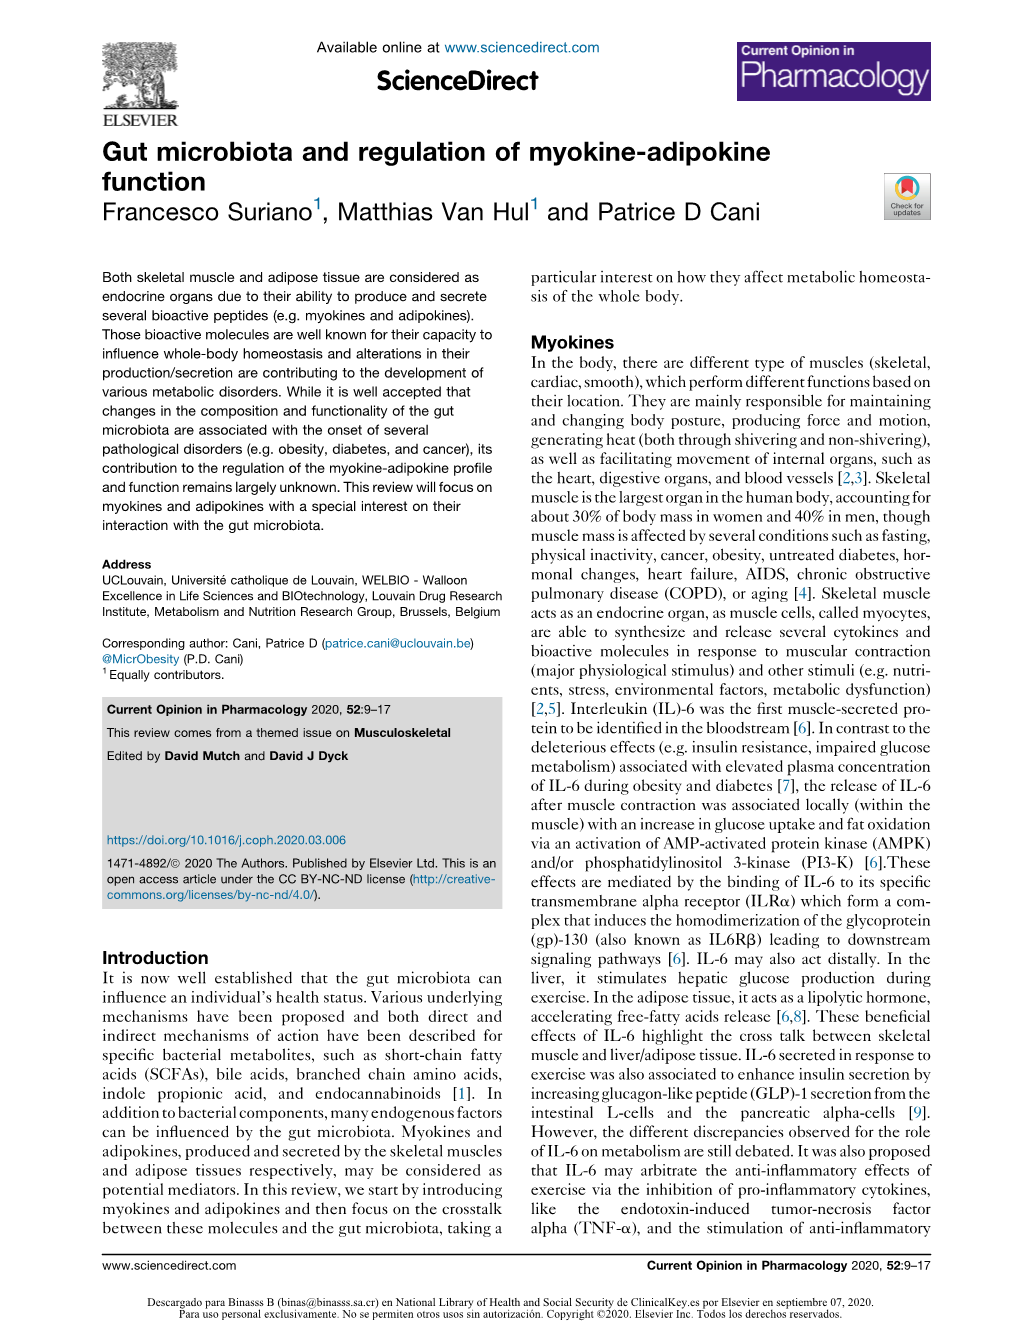 Gut Microbiota and Regulation of Myokine-Adipokine Function